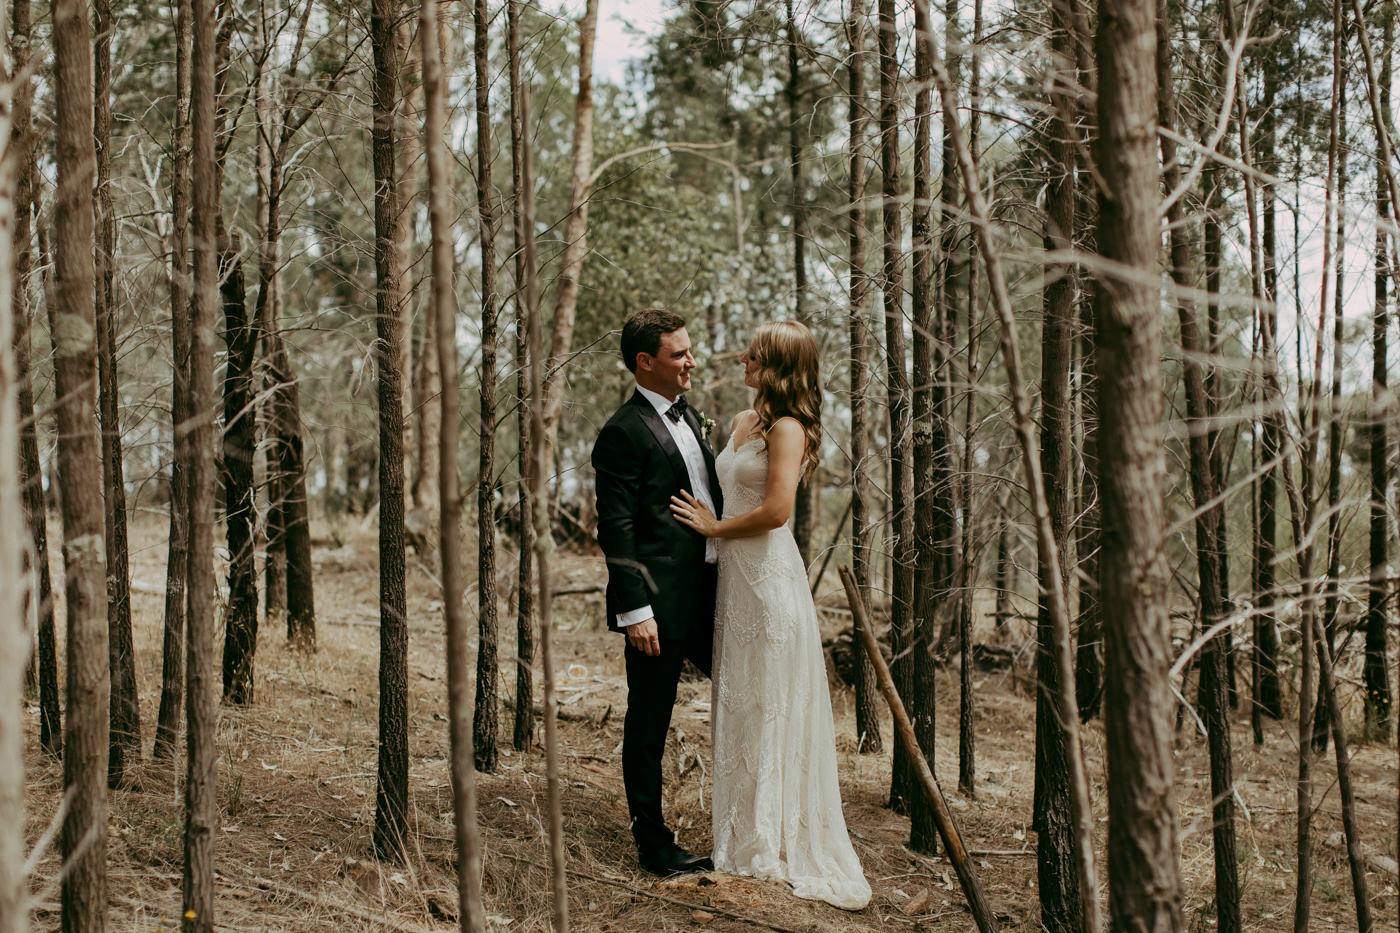 Anthony & Eliet - Wagga Wagga Wedding - Country NSW - Samantha Heather Photography-67.jpg